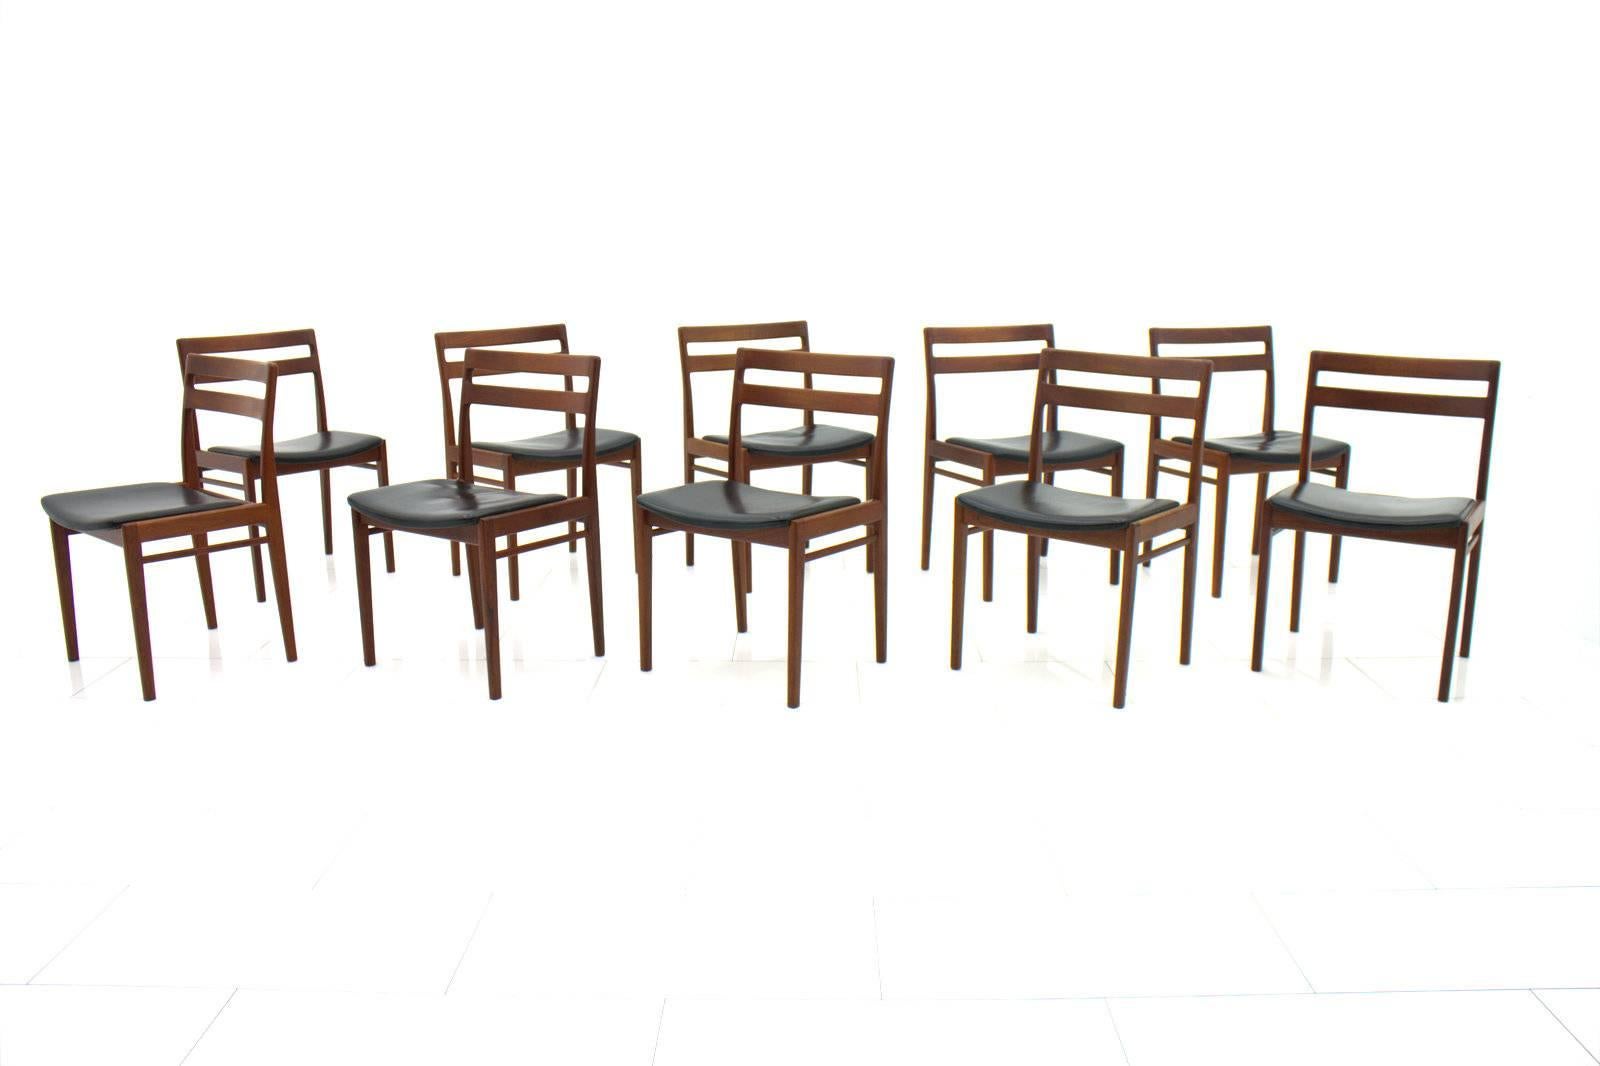 Large set of ten Rosengren Hansen teak wood and leather chairs, Denmark, 1960s.

Very good original condition.

Worldwide shipping.